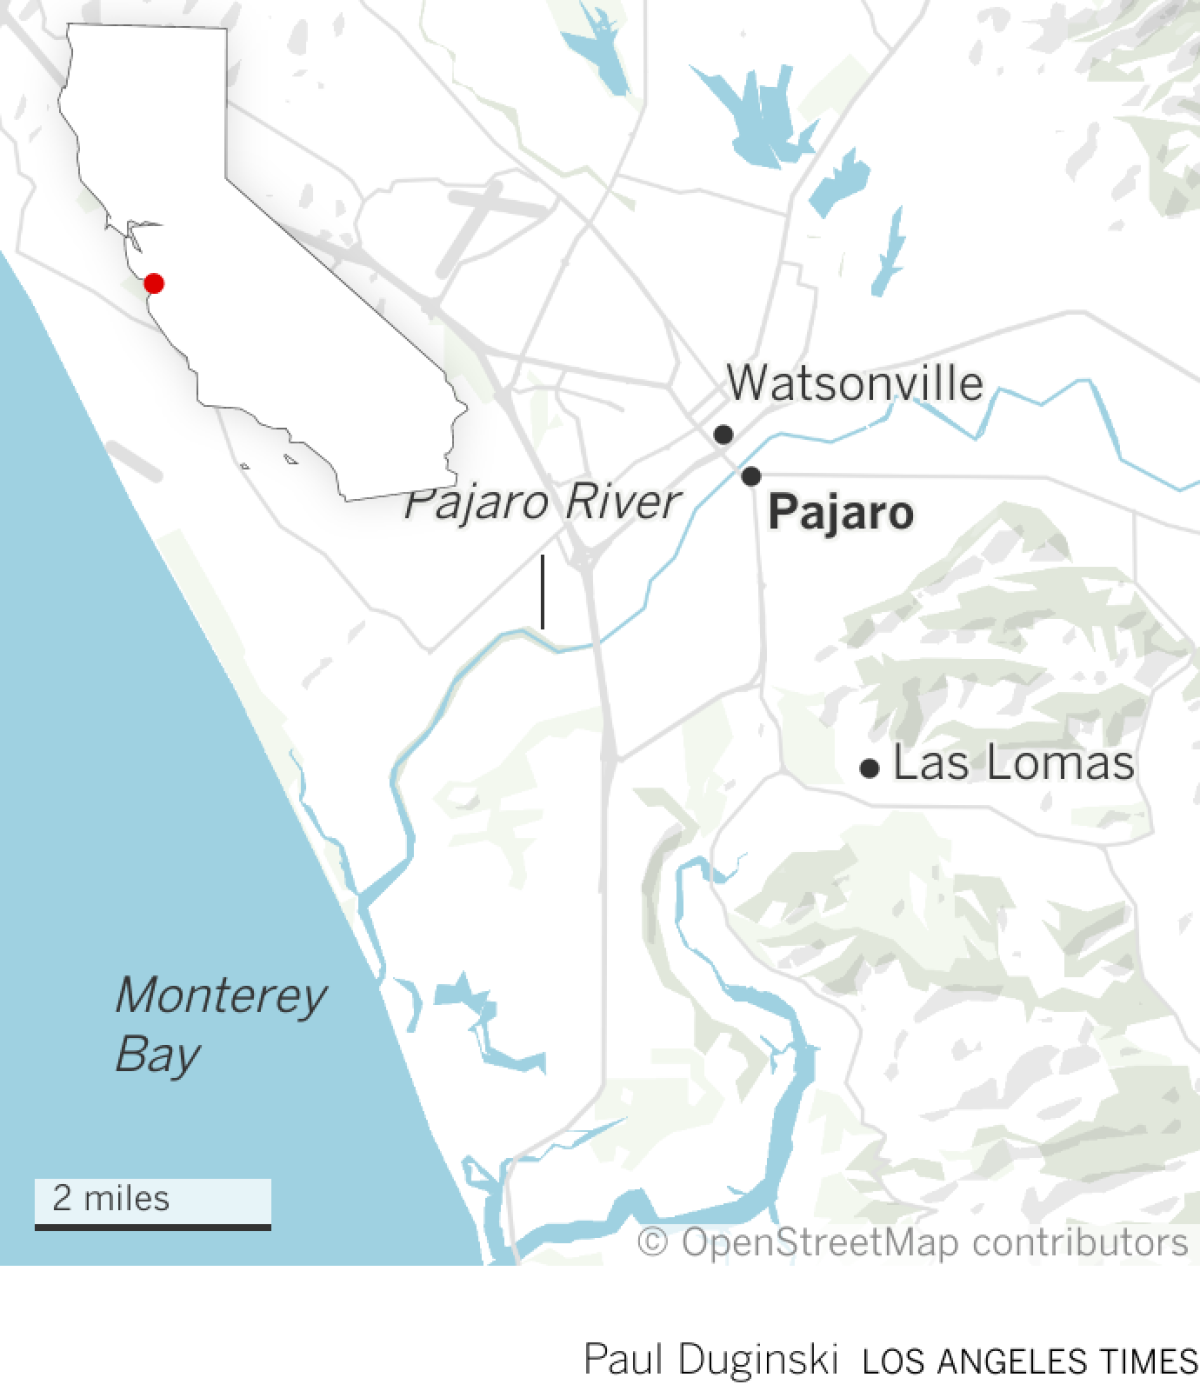 Location map of Pajaro and the Pajaro River.